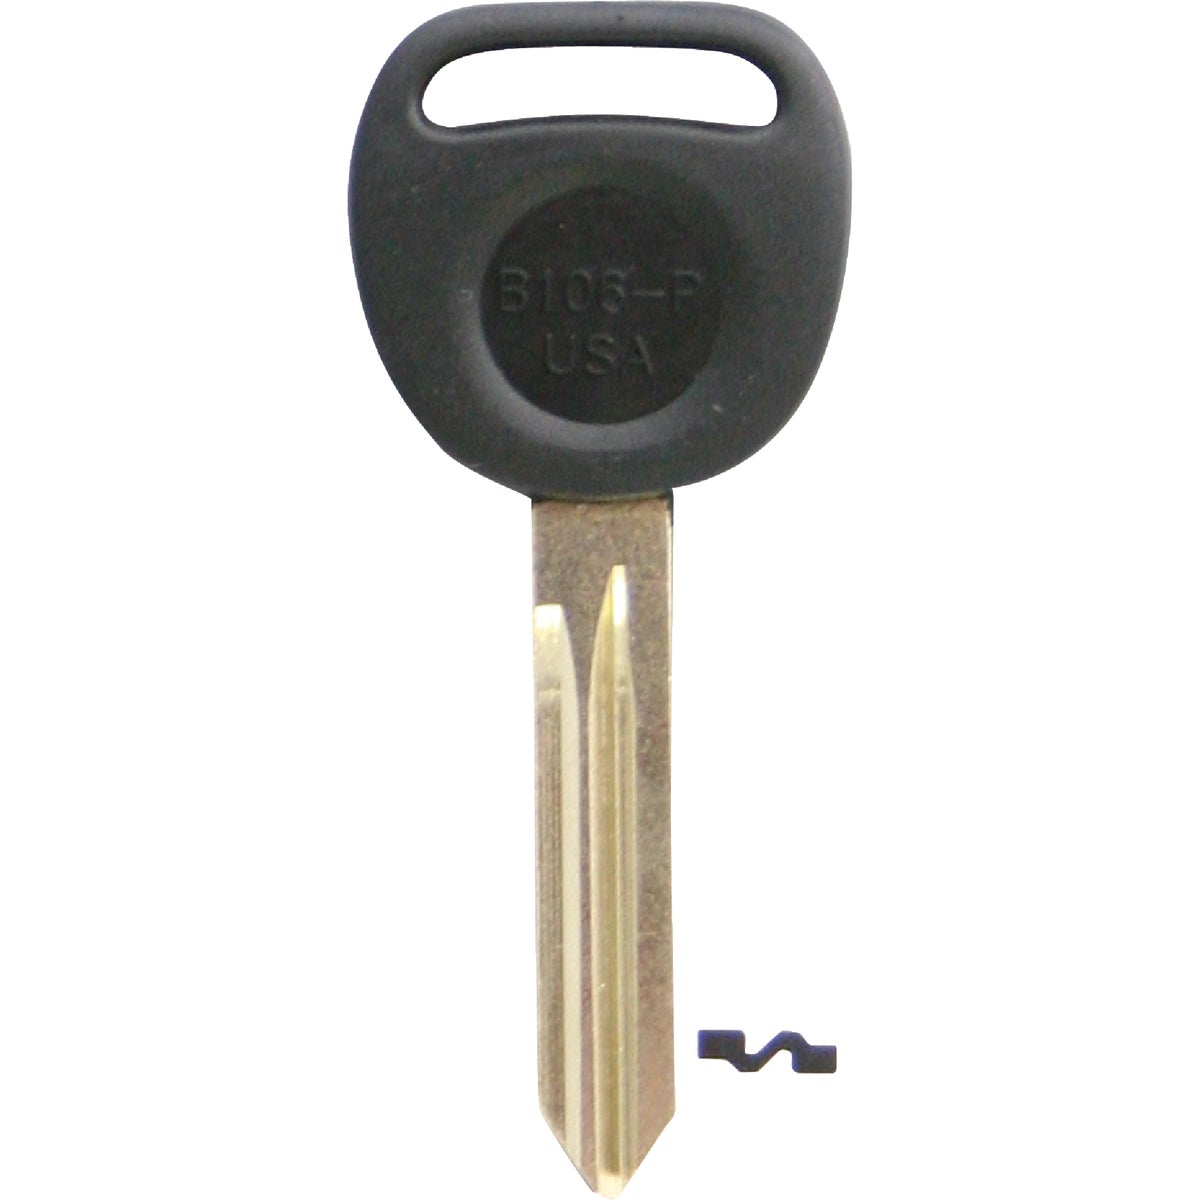 ILCO GM Nickel Plated Automotive Key, B106-P / B106P (5-Pack)